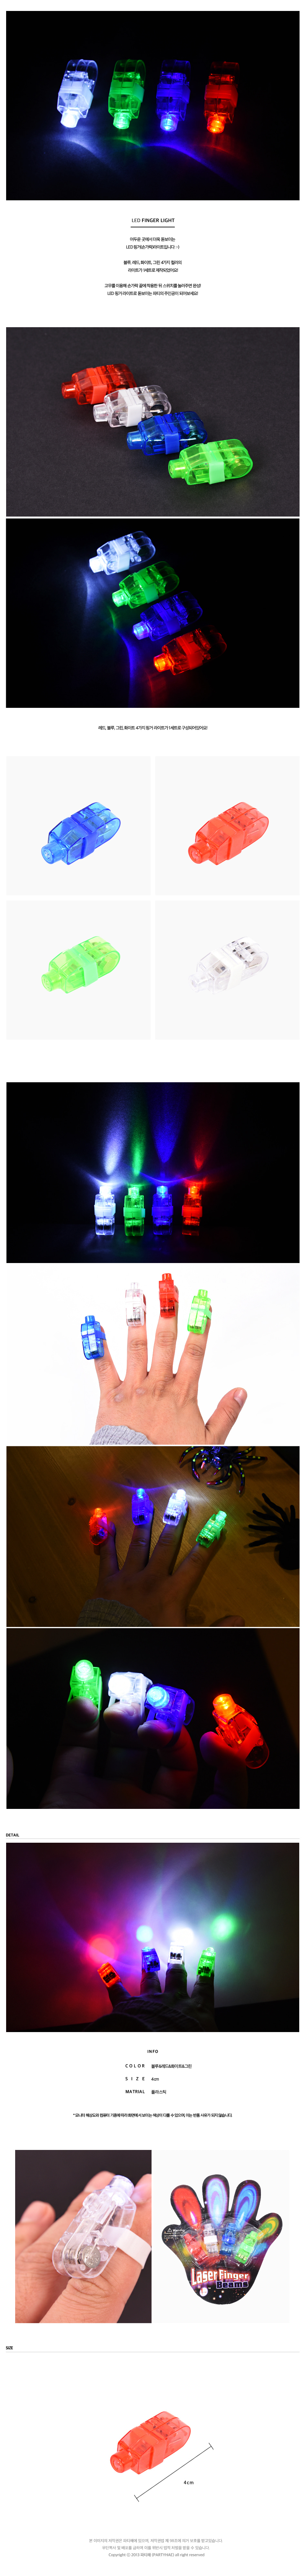 LED 핑거(손가락)라이트 - 4개입 1,000원 - 파티해 키덜트/취미, 파티용품/의상, 파티용품, LED용품/전구 바보사랑 LED 핑거(손가락)라이트 - 4개입 1,000원 - 파티해 키덜트/취미, 파티용품/의상, 파티용품, LED용품/전구 바보사랑